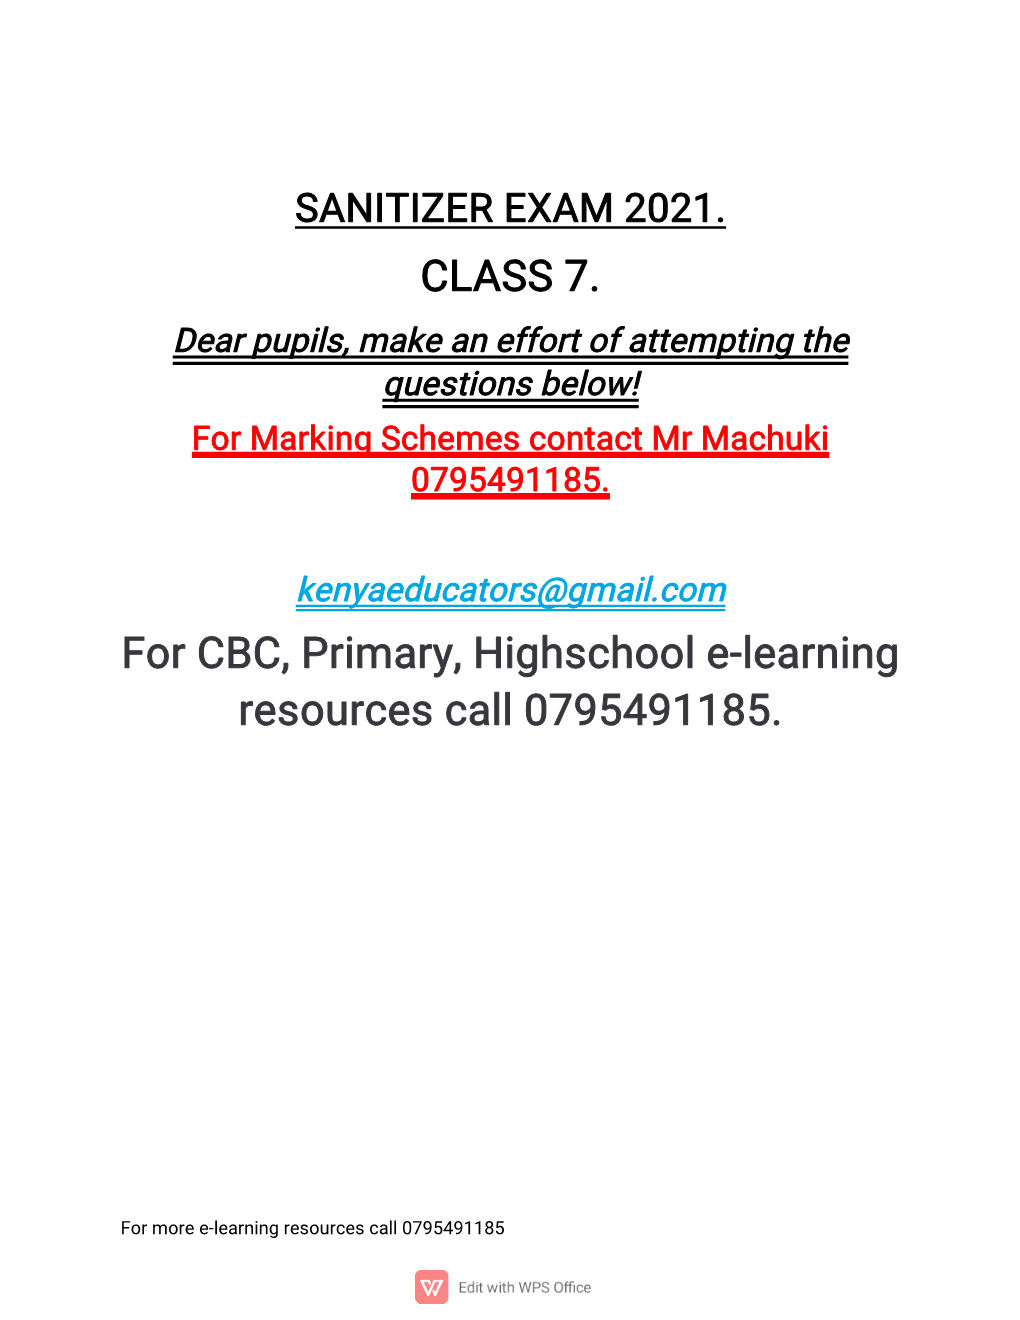 Class 7 Sanitizer Exam 2021